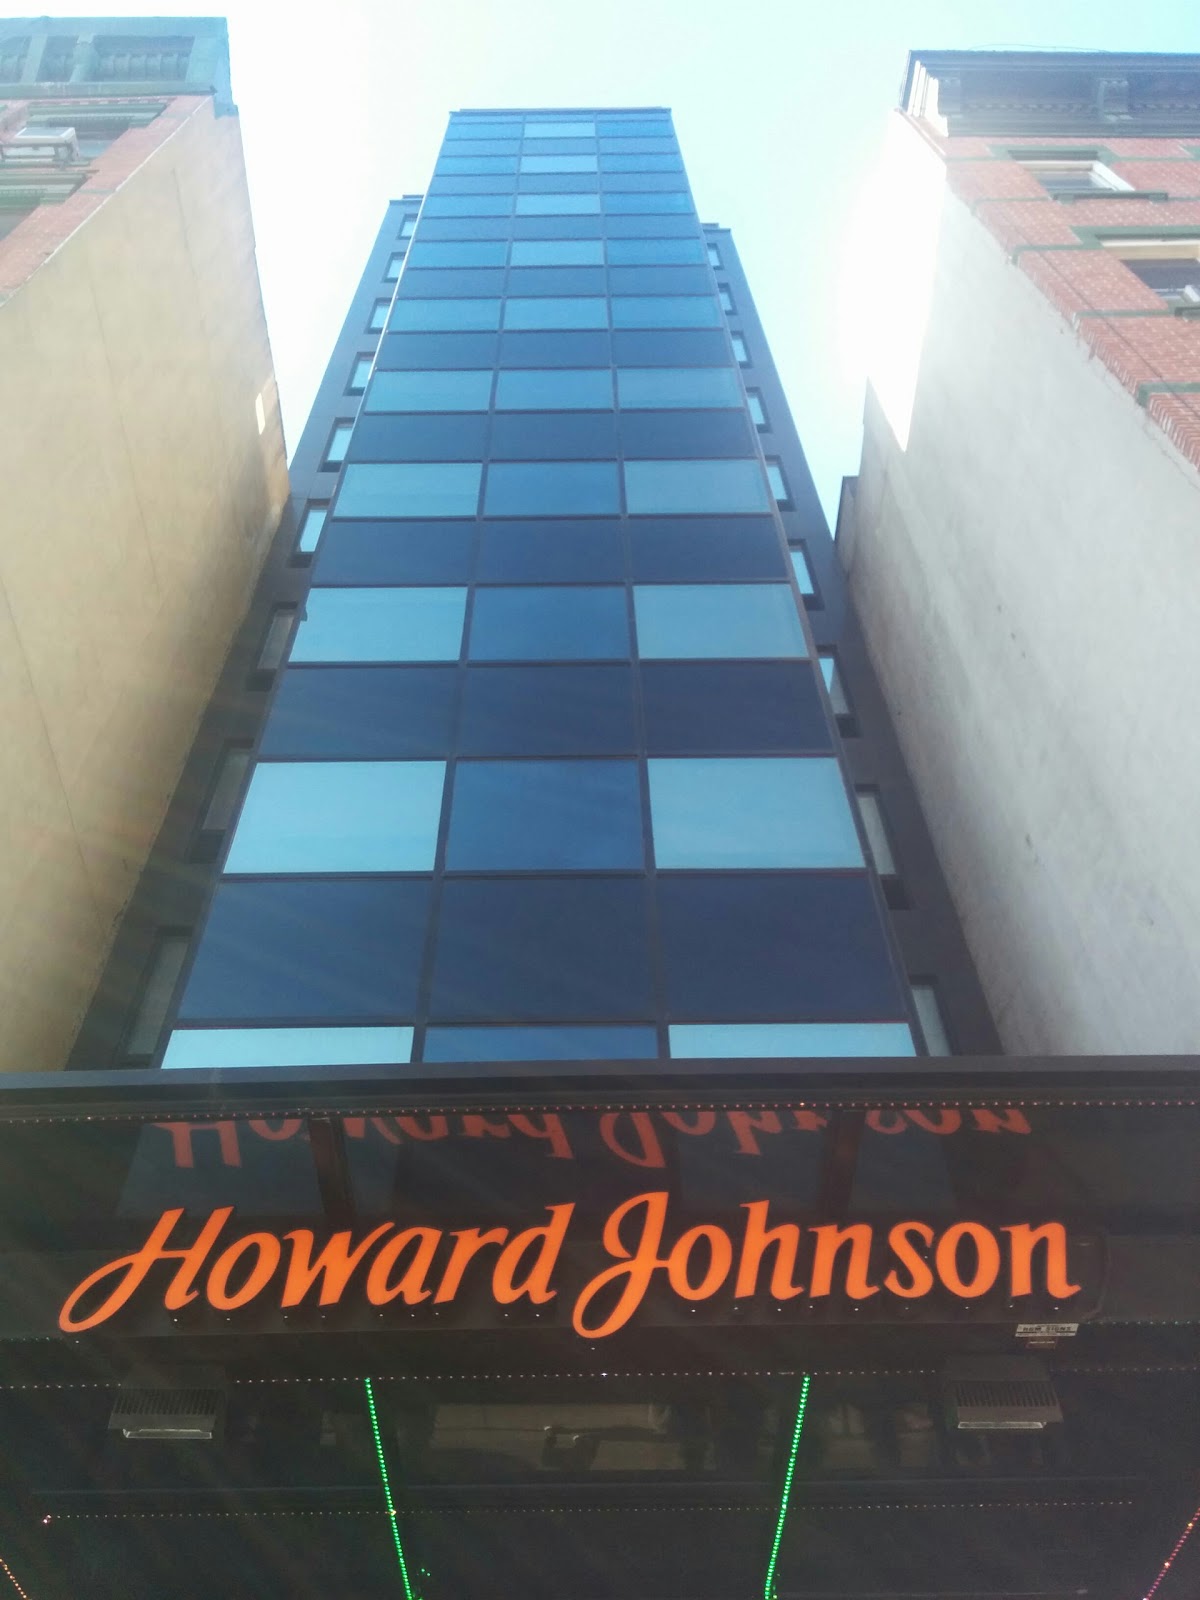 Photo of Howard Johnson Manhattan Soho in New York City, New York, United States - 3 Picture of Point of interest, Establishment, Lodging